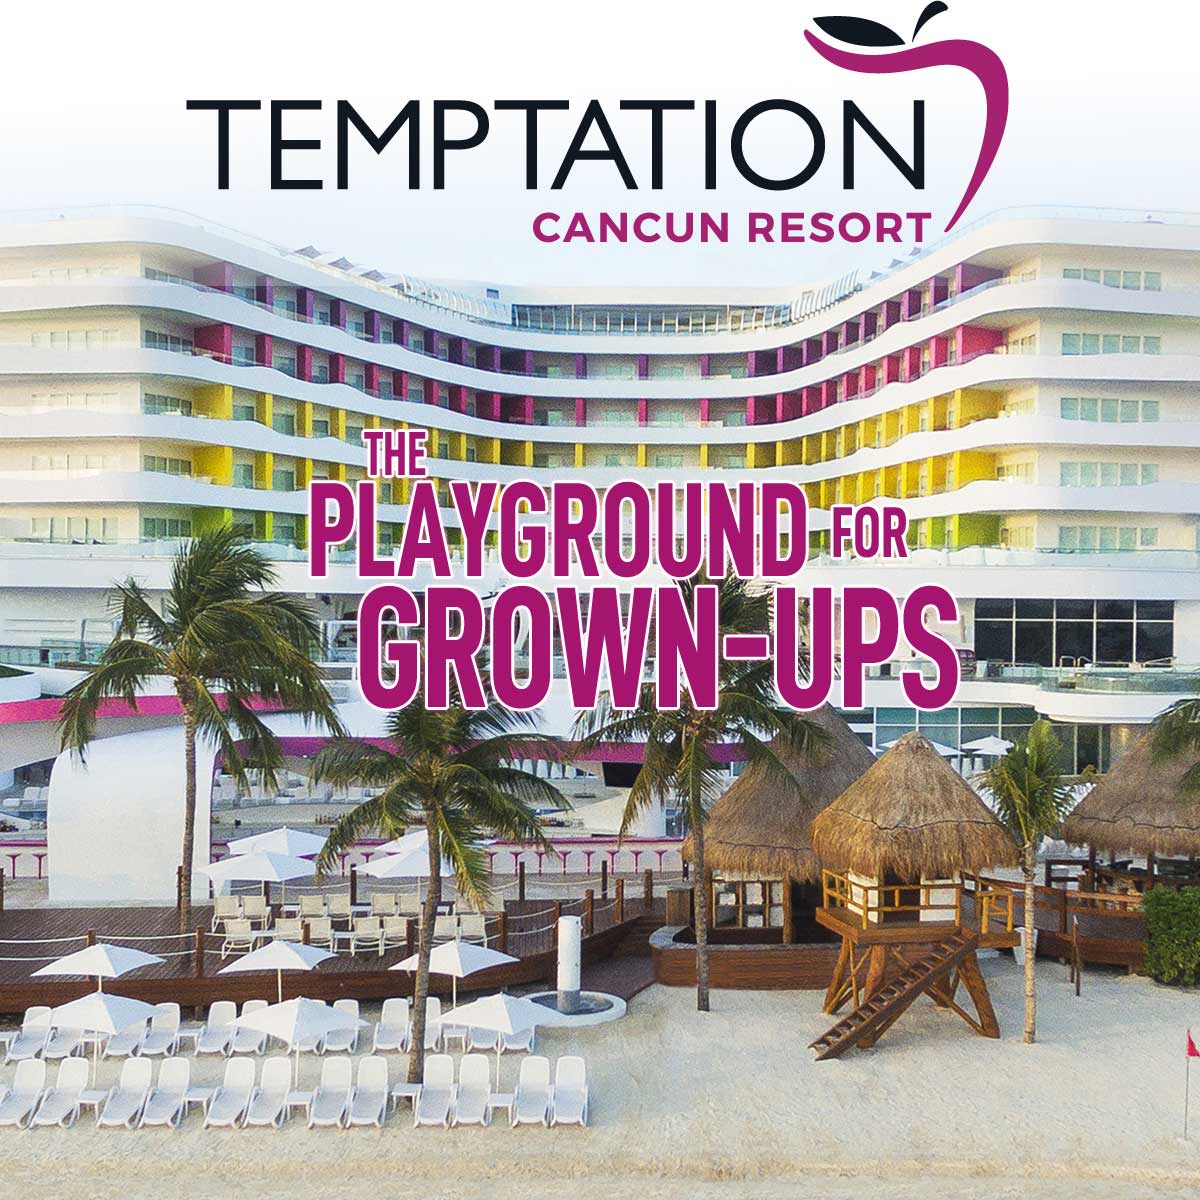 Temptation Cancun pic